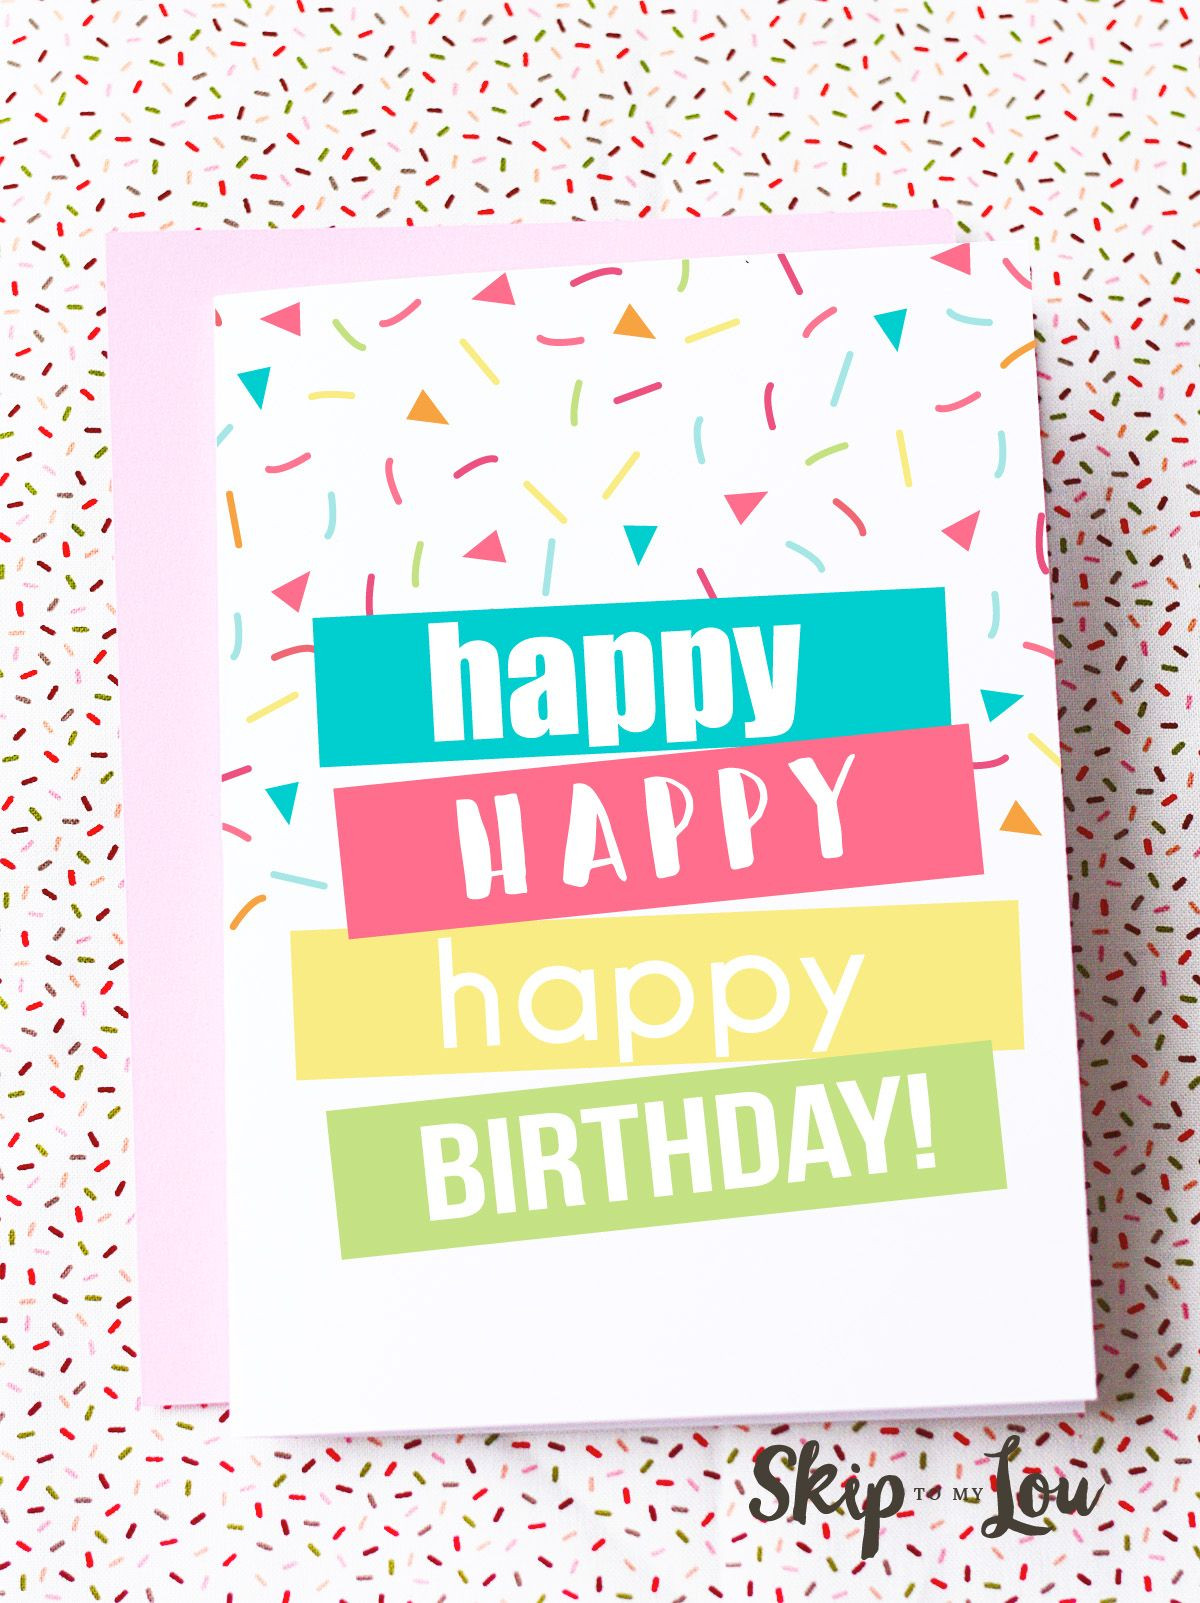 Print Birthday Card Free
 Free printable happy birthday card Need a last minute